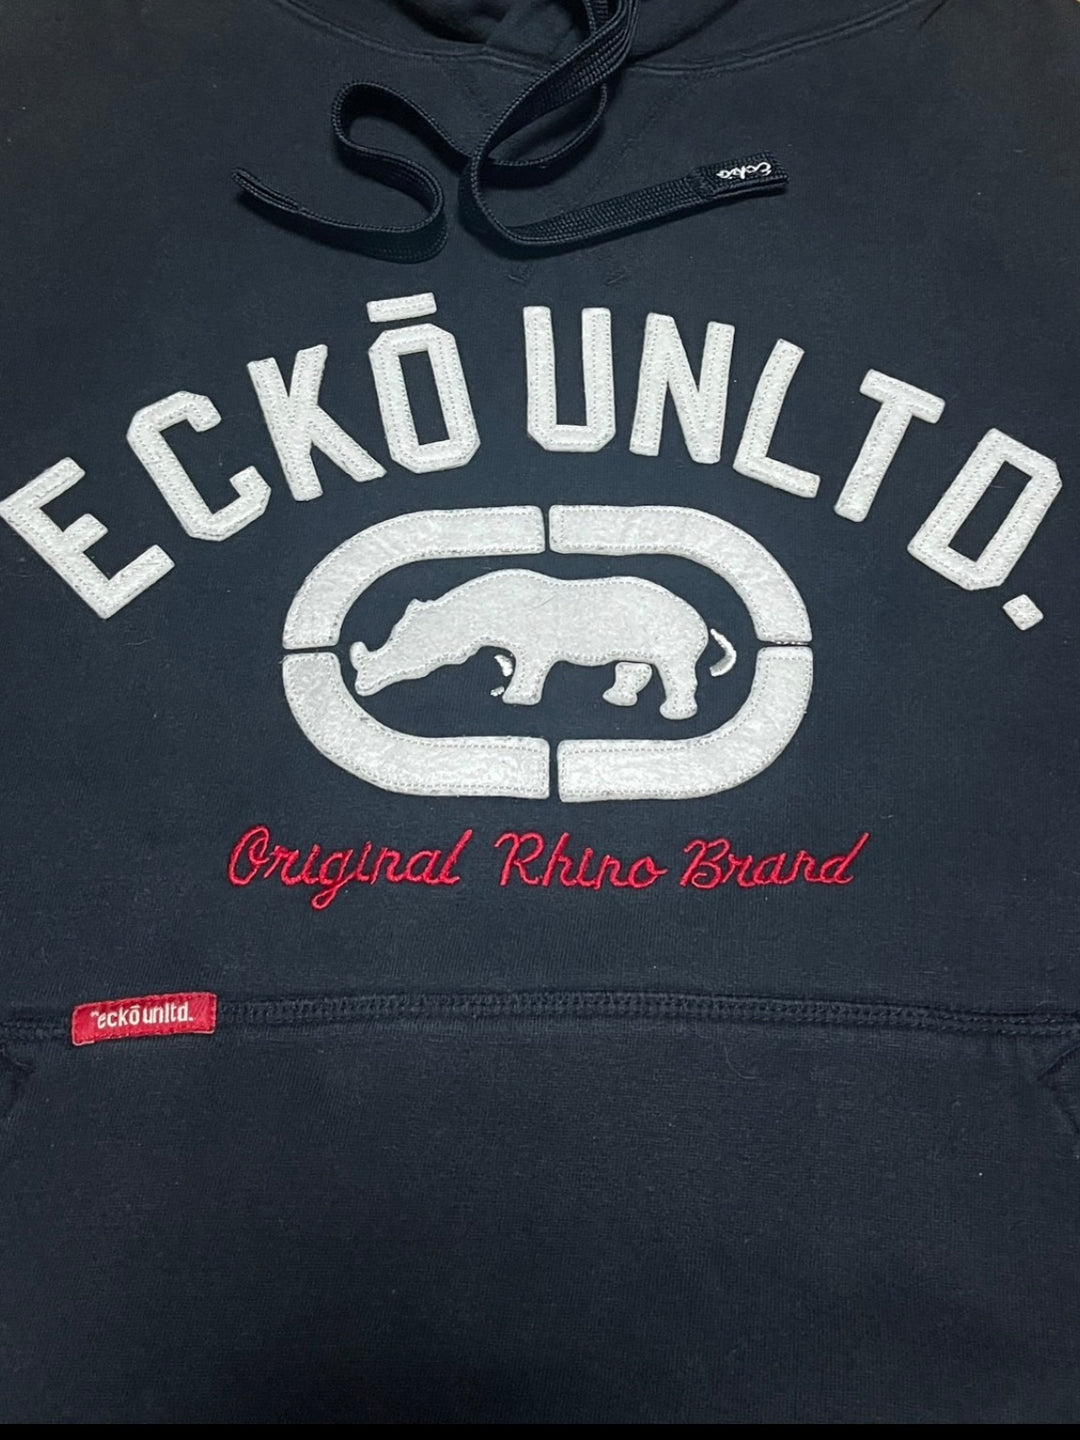 "ECKO UNLTD" logo design sweat hoodie